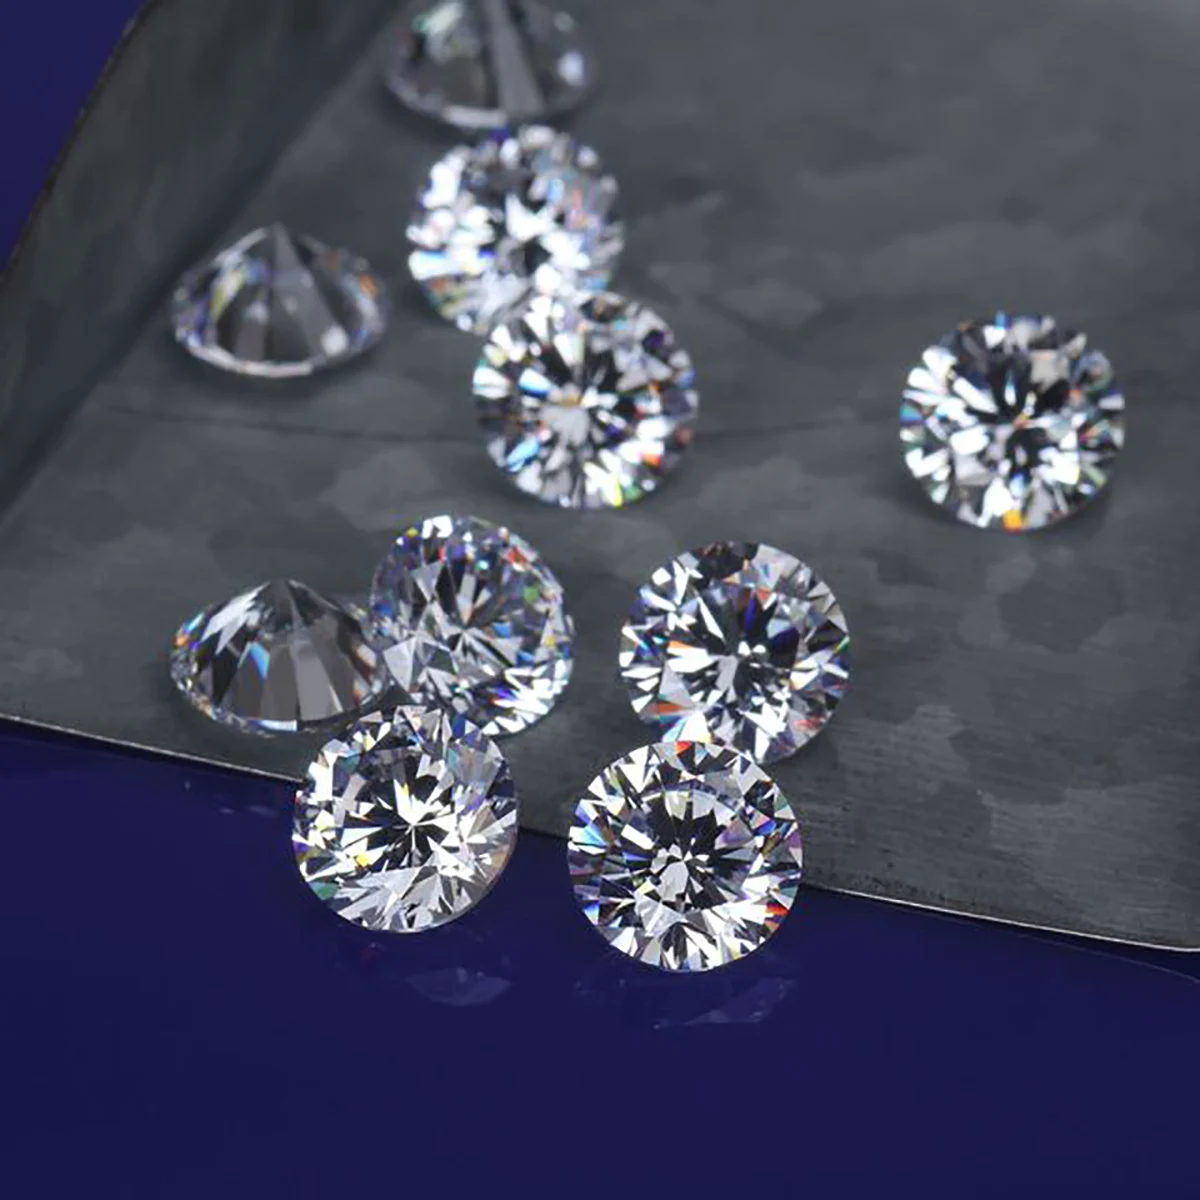 de diamante para material de jóias venda quente